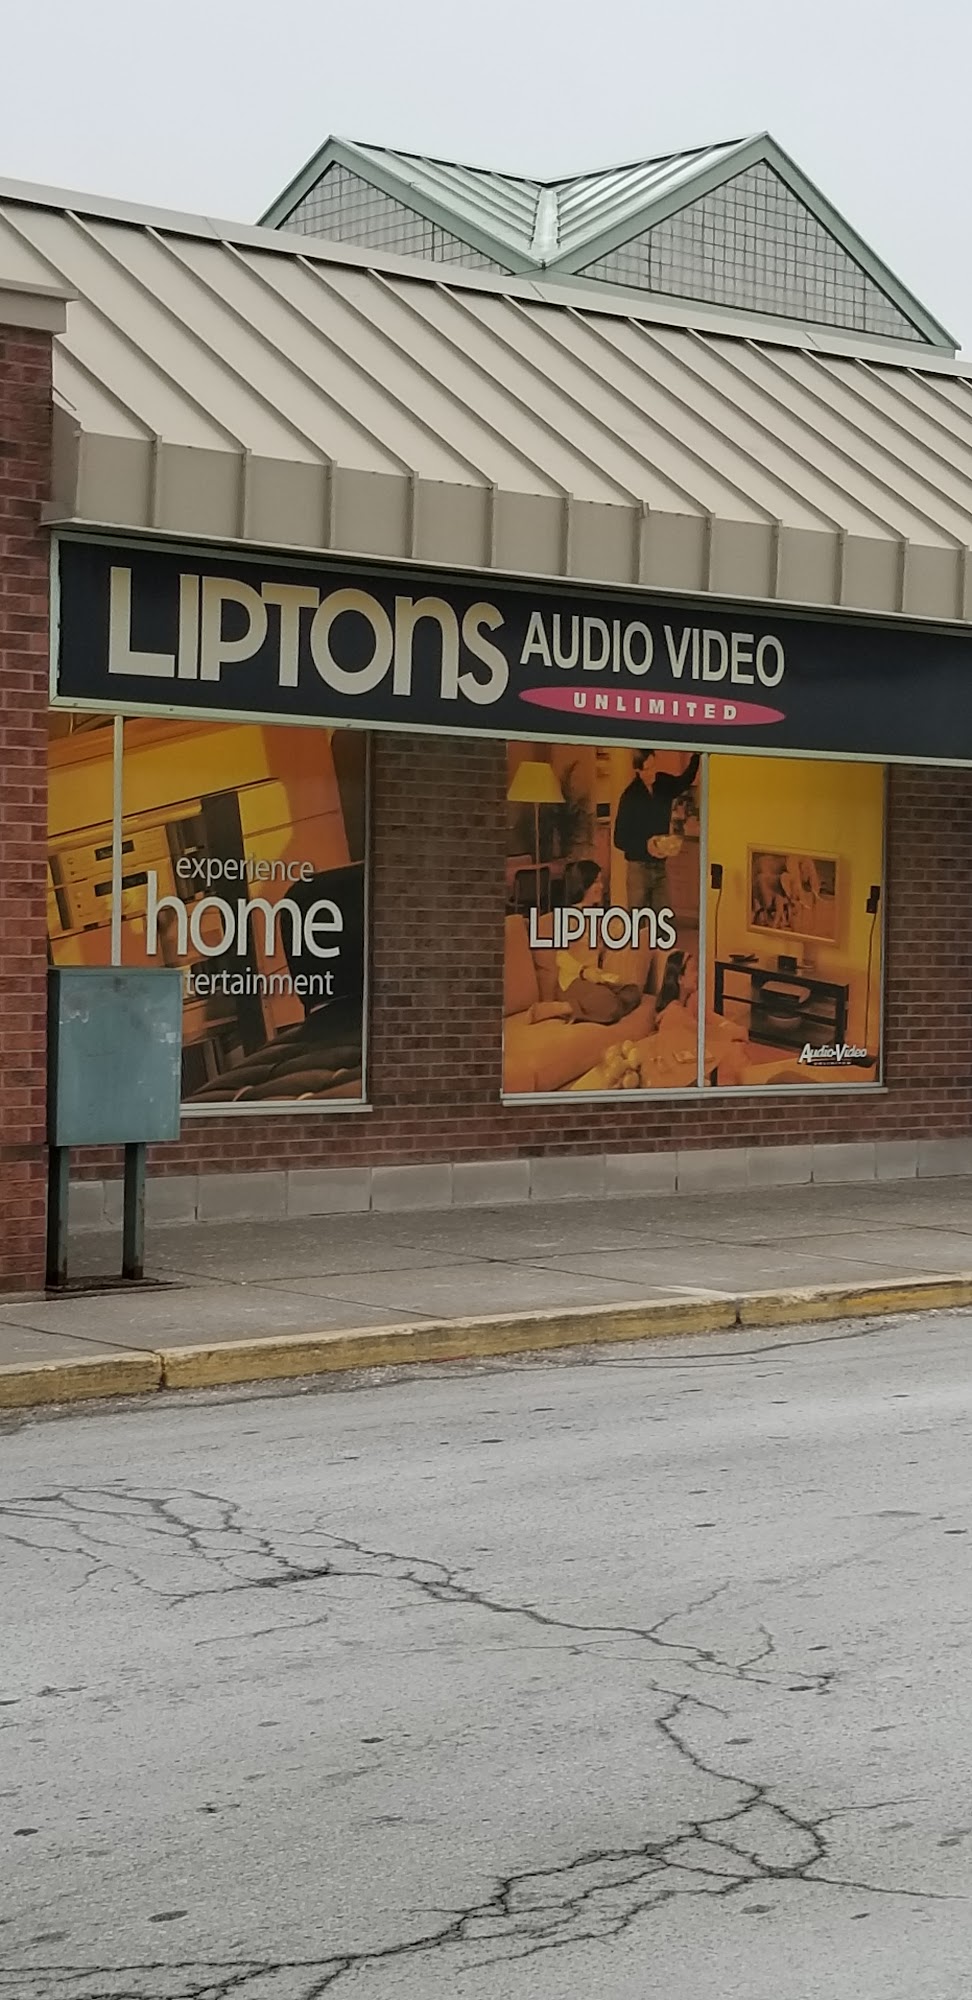 Liptons Audio Video Unlimited